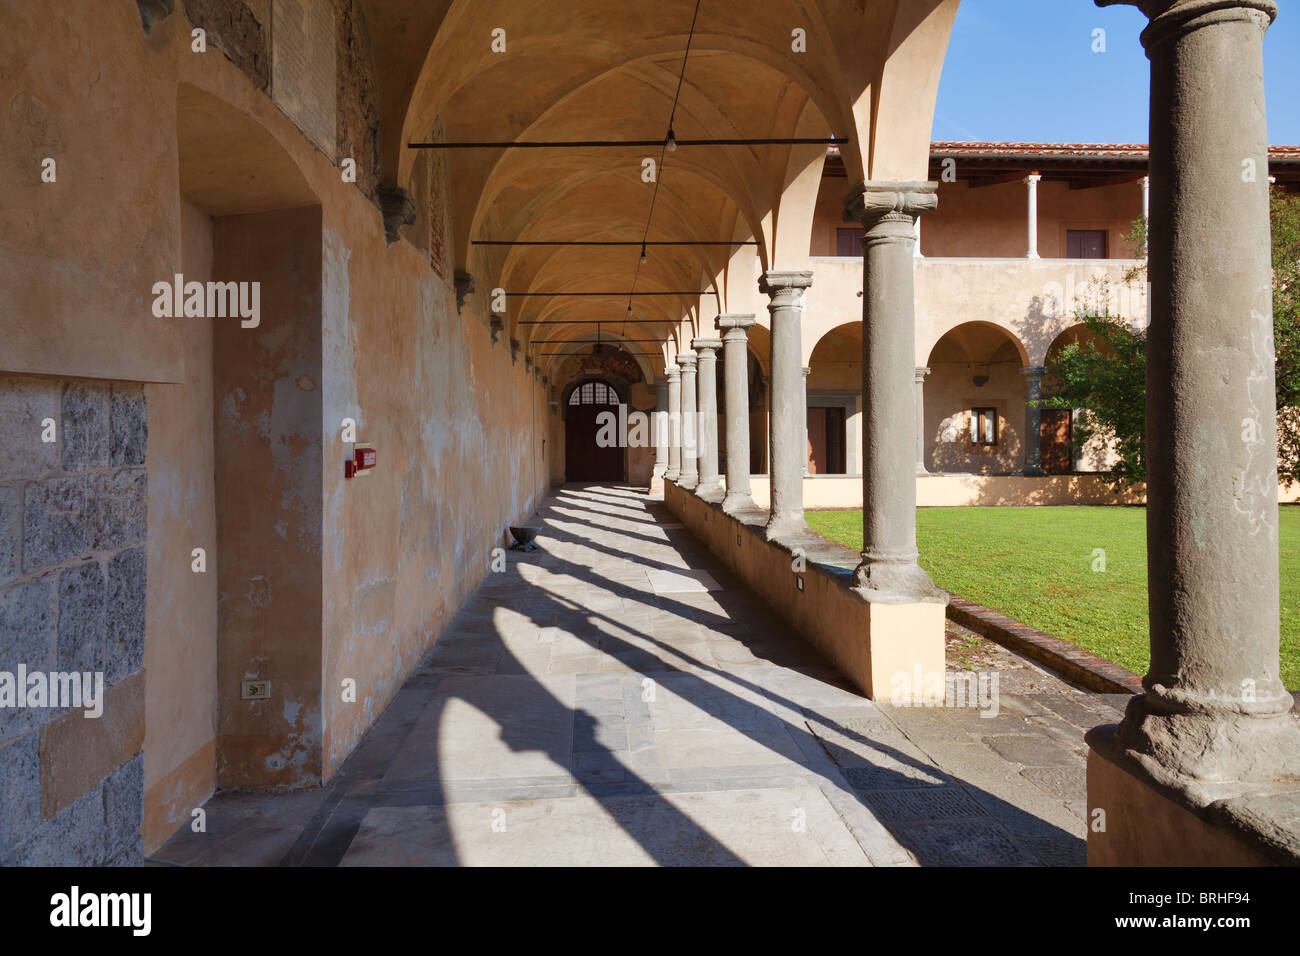 Hotel Santa Croce in Fossabanda monastero trasformato in Pisa, Italia Foto  stock - Alamy